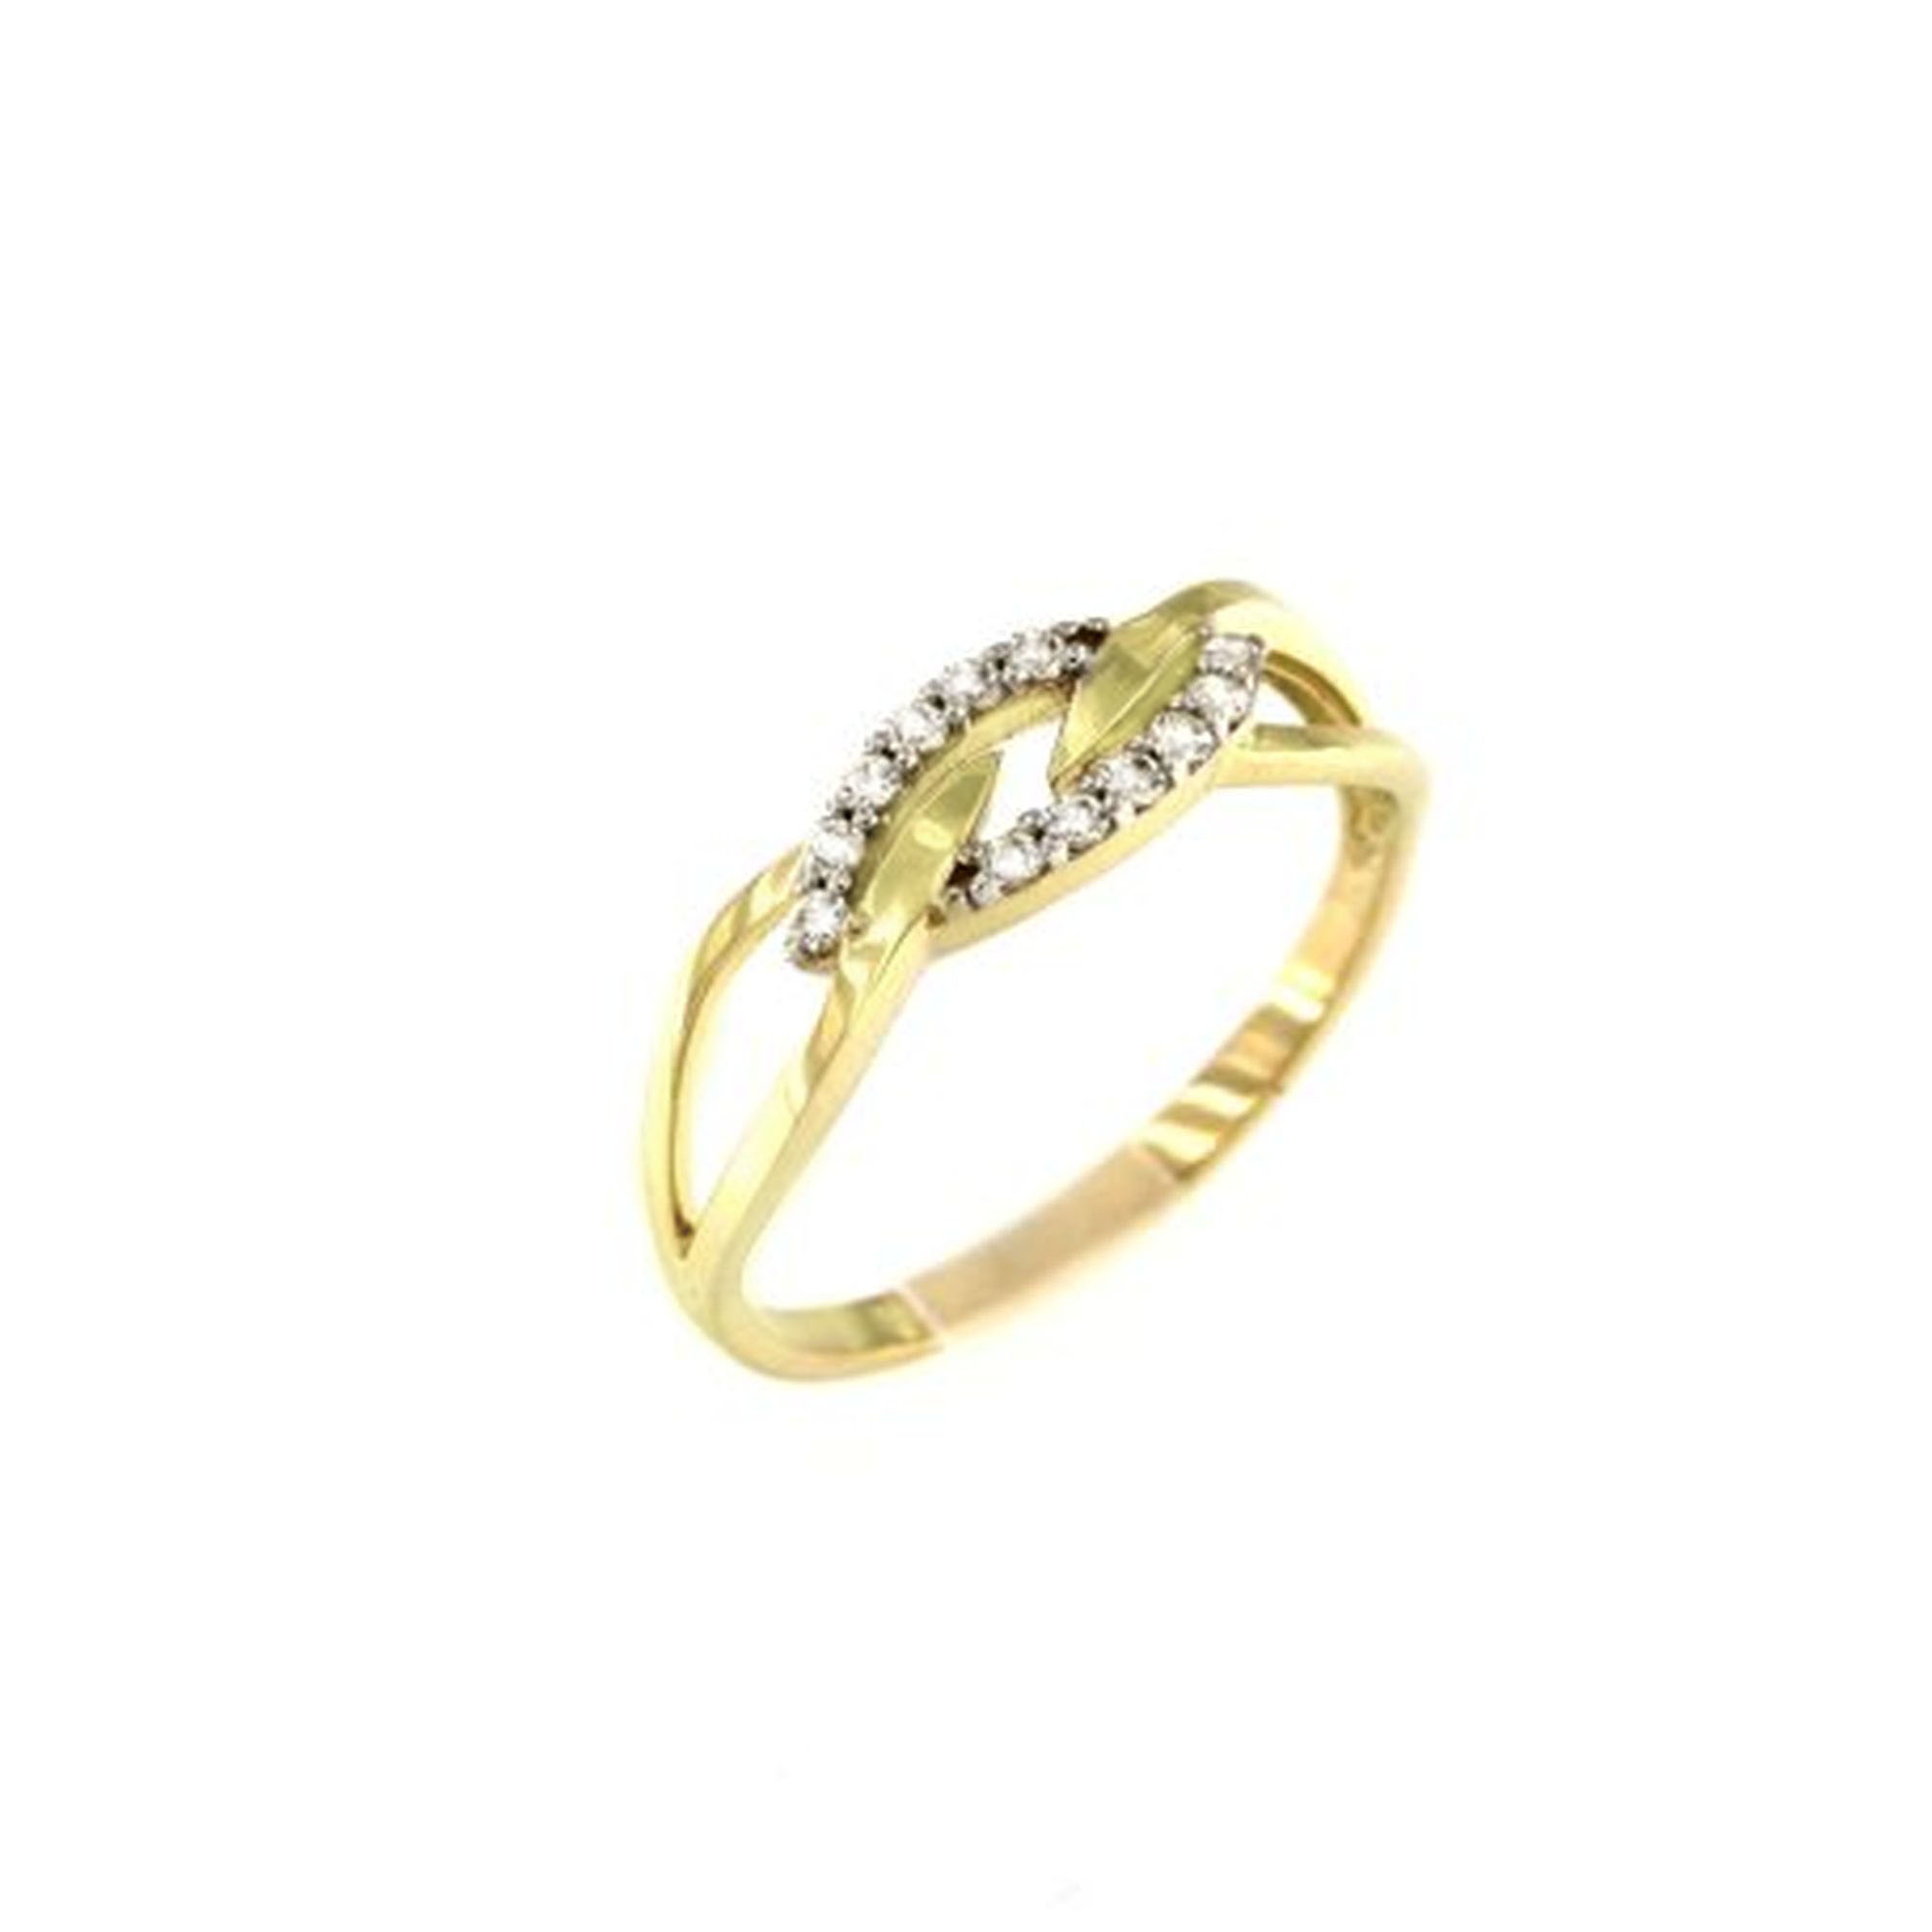 MOISS Moiss prsten ze žlutého zlata SCARLET RA000341 Velikost 54 mm RA000341 + doprava ZDARMA